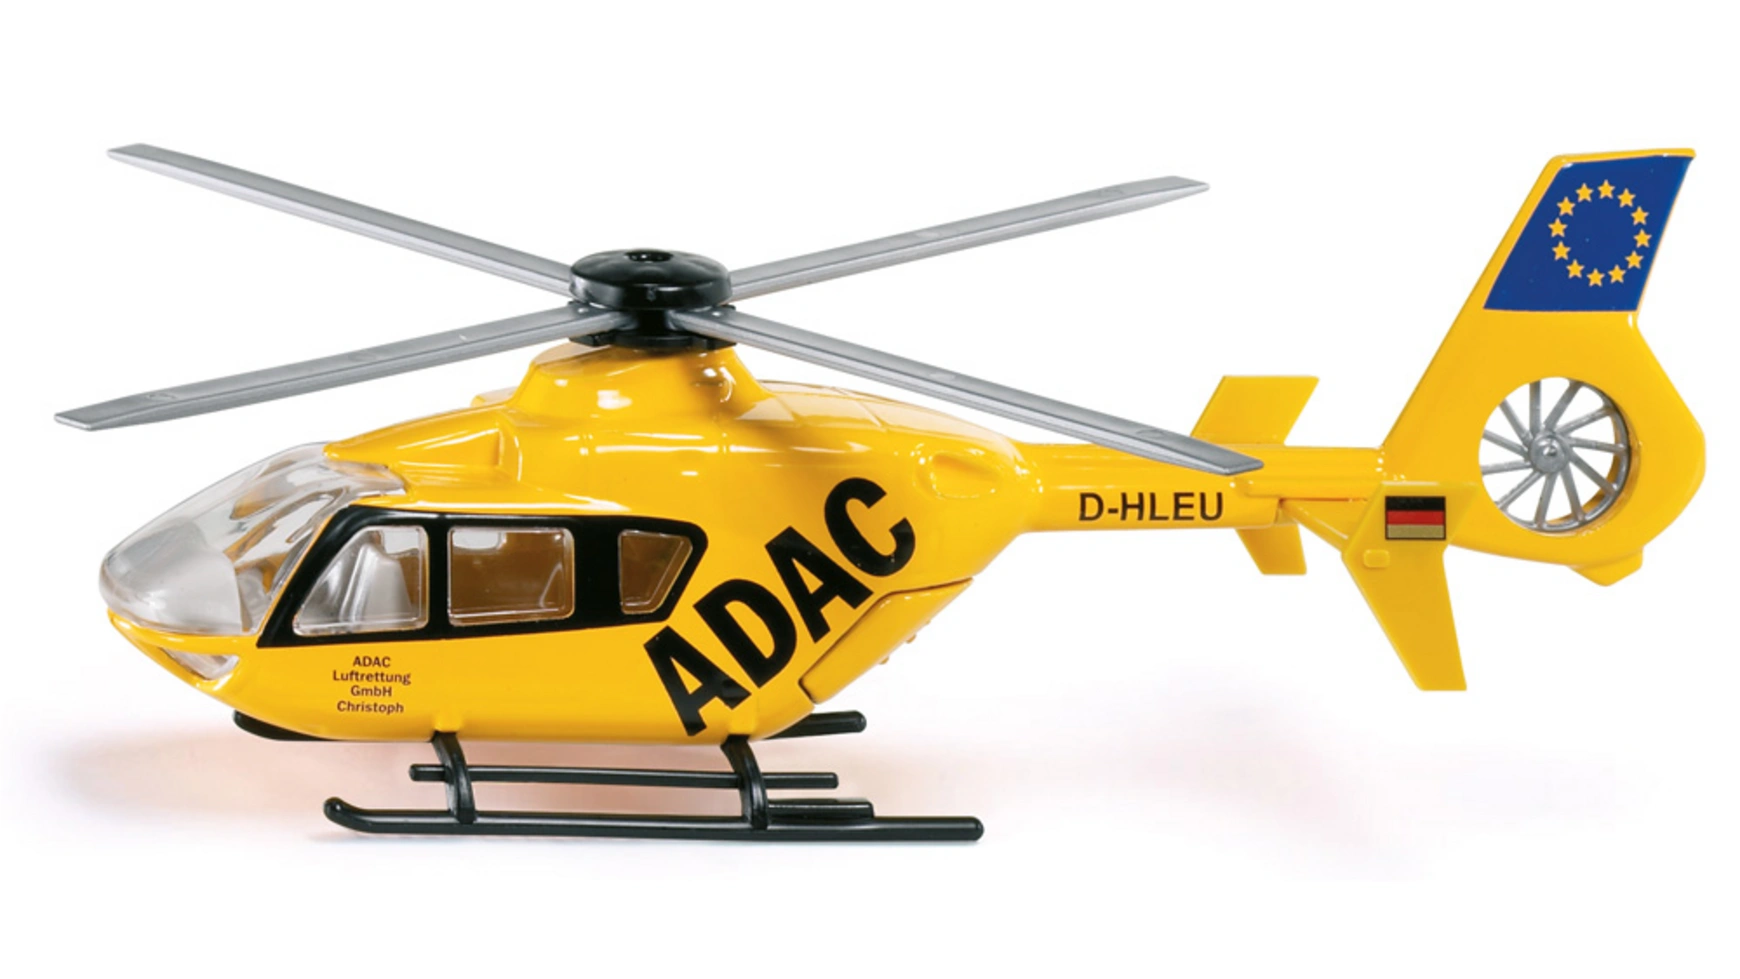 Супер спасательный вертолет Siku вертолет siku красно желтый